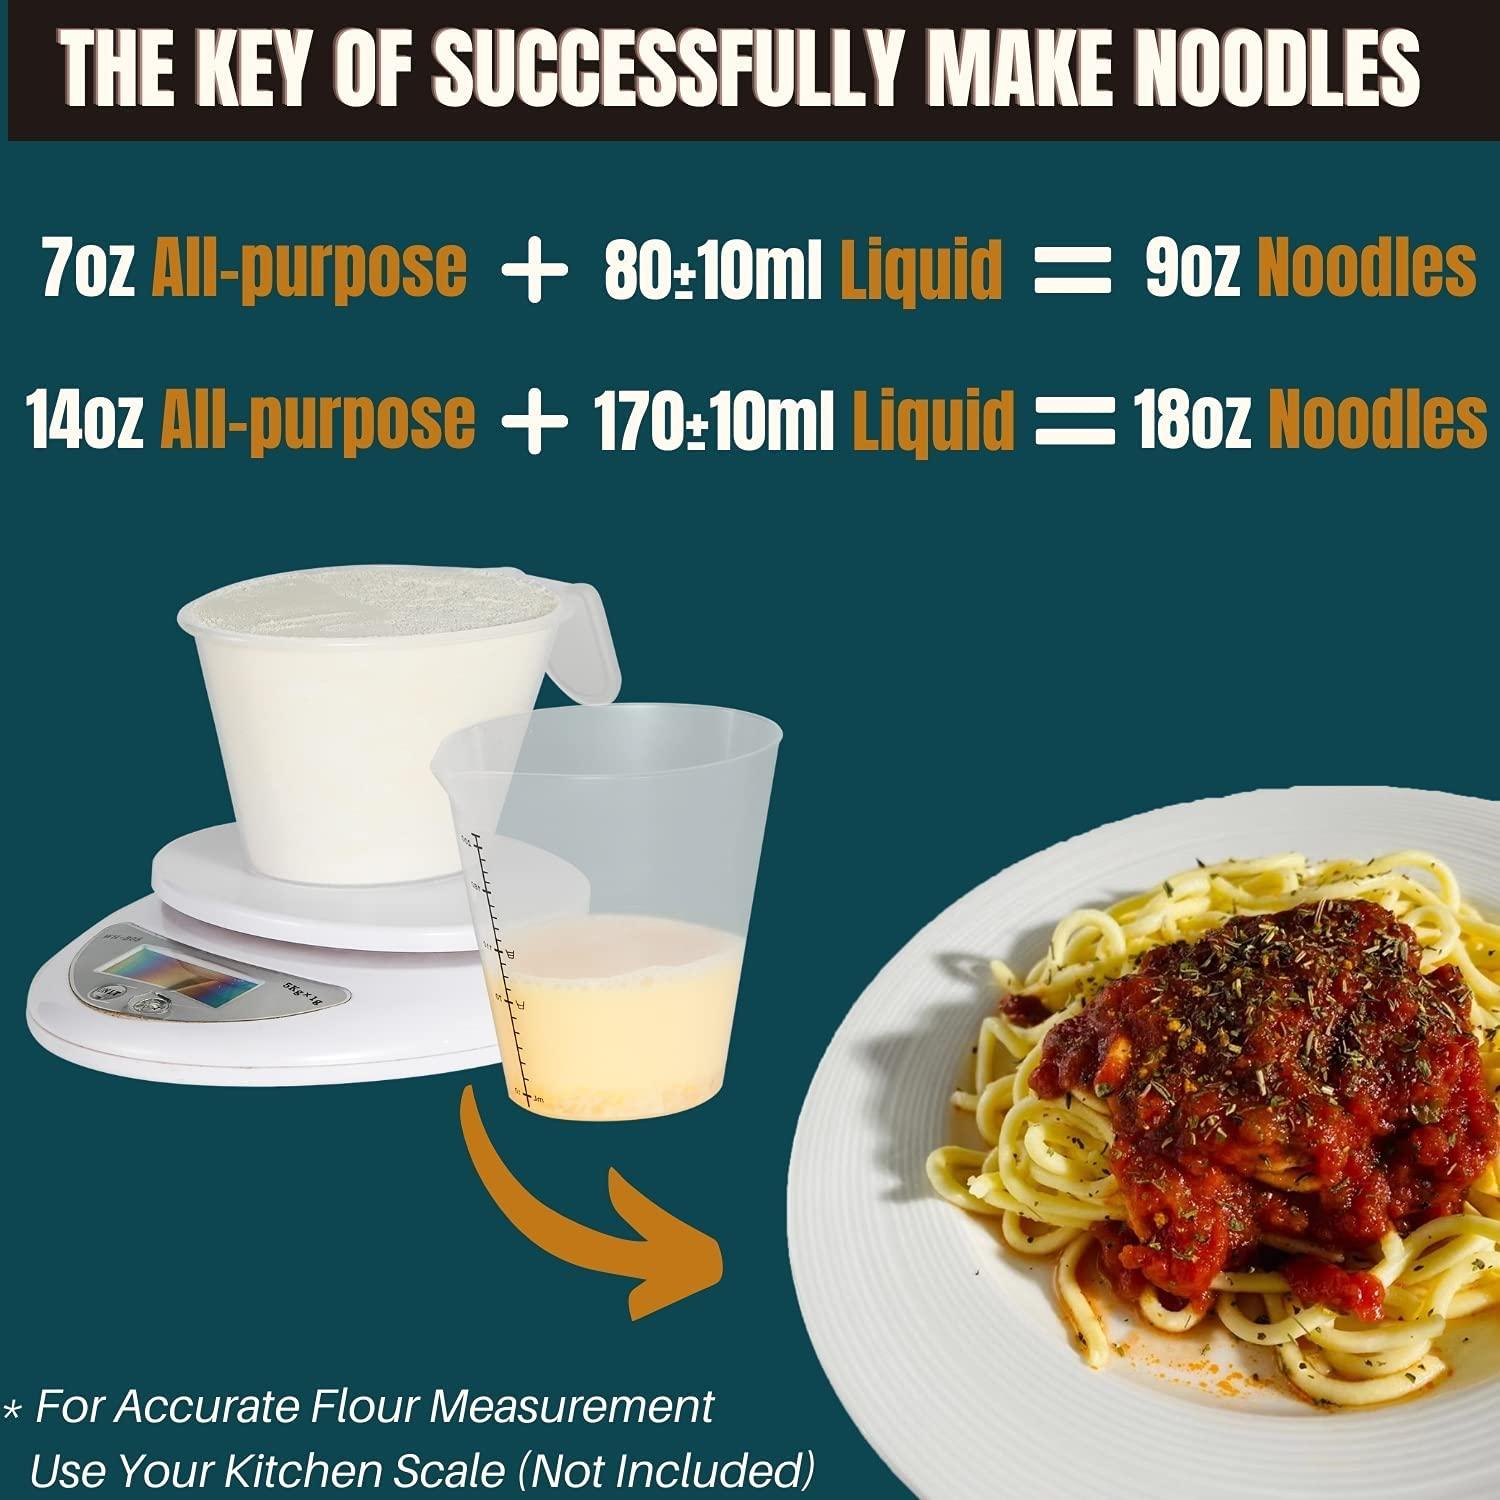  Razorri Electric Pasta and Ramen Noodle Maker - Make 1